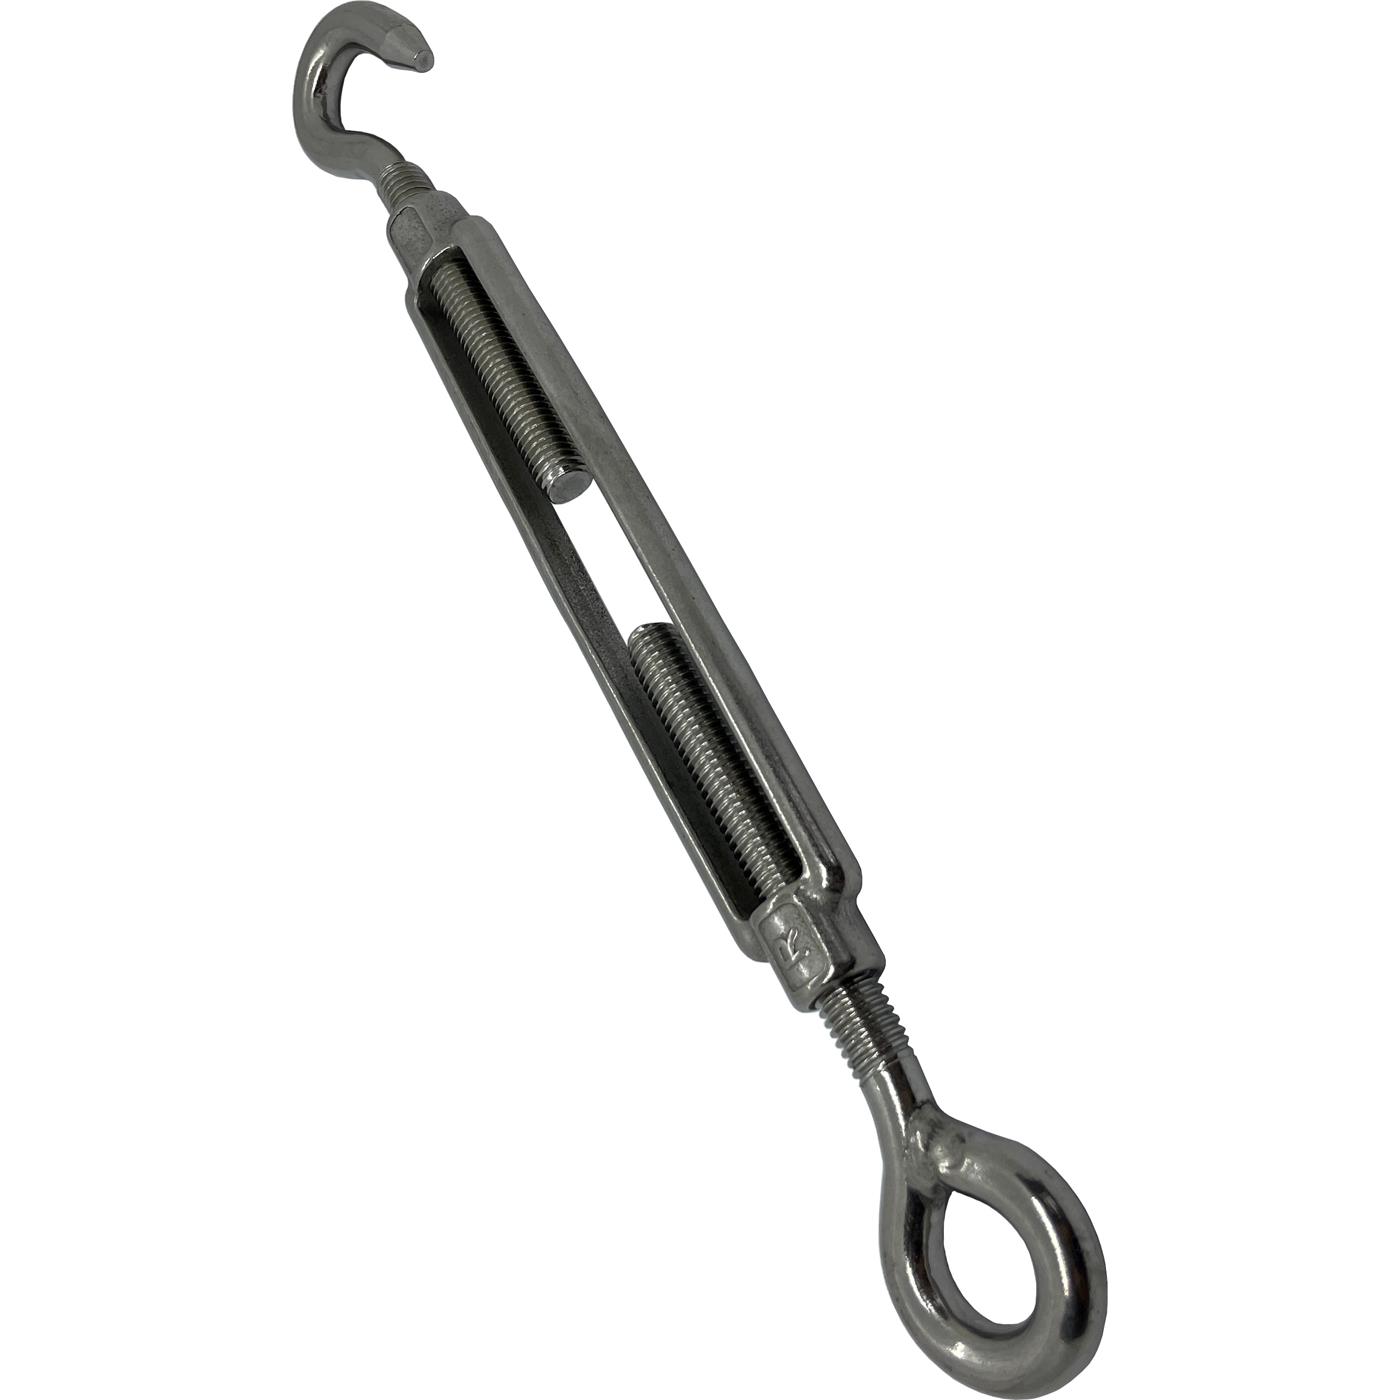 Rope tensioner Eyelet-Hook Stainless steel V2A 304 M8 Turnbuckle Shroud clamp